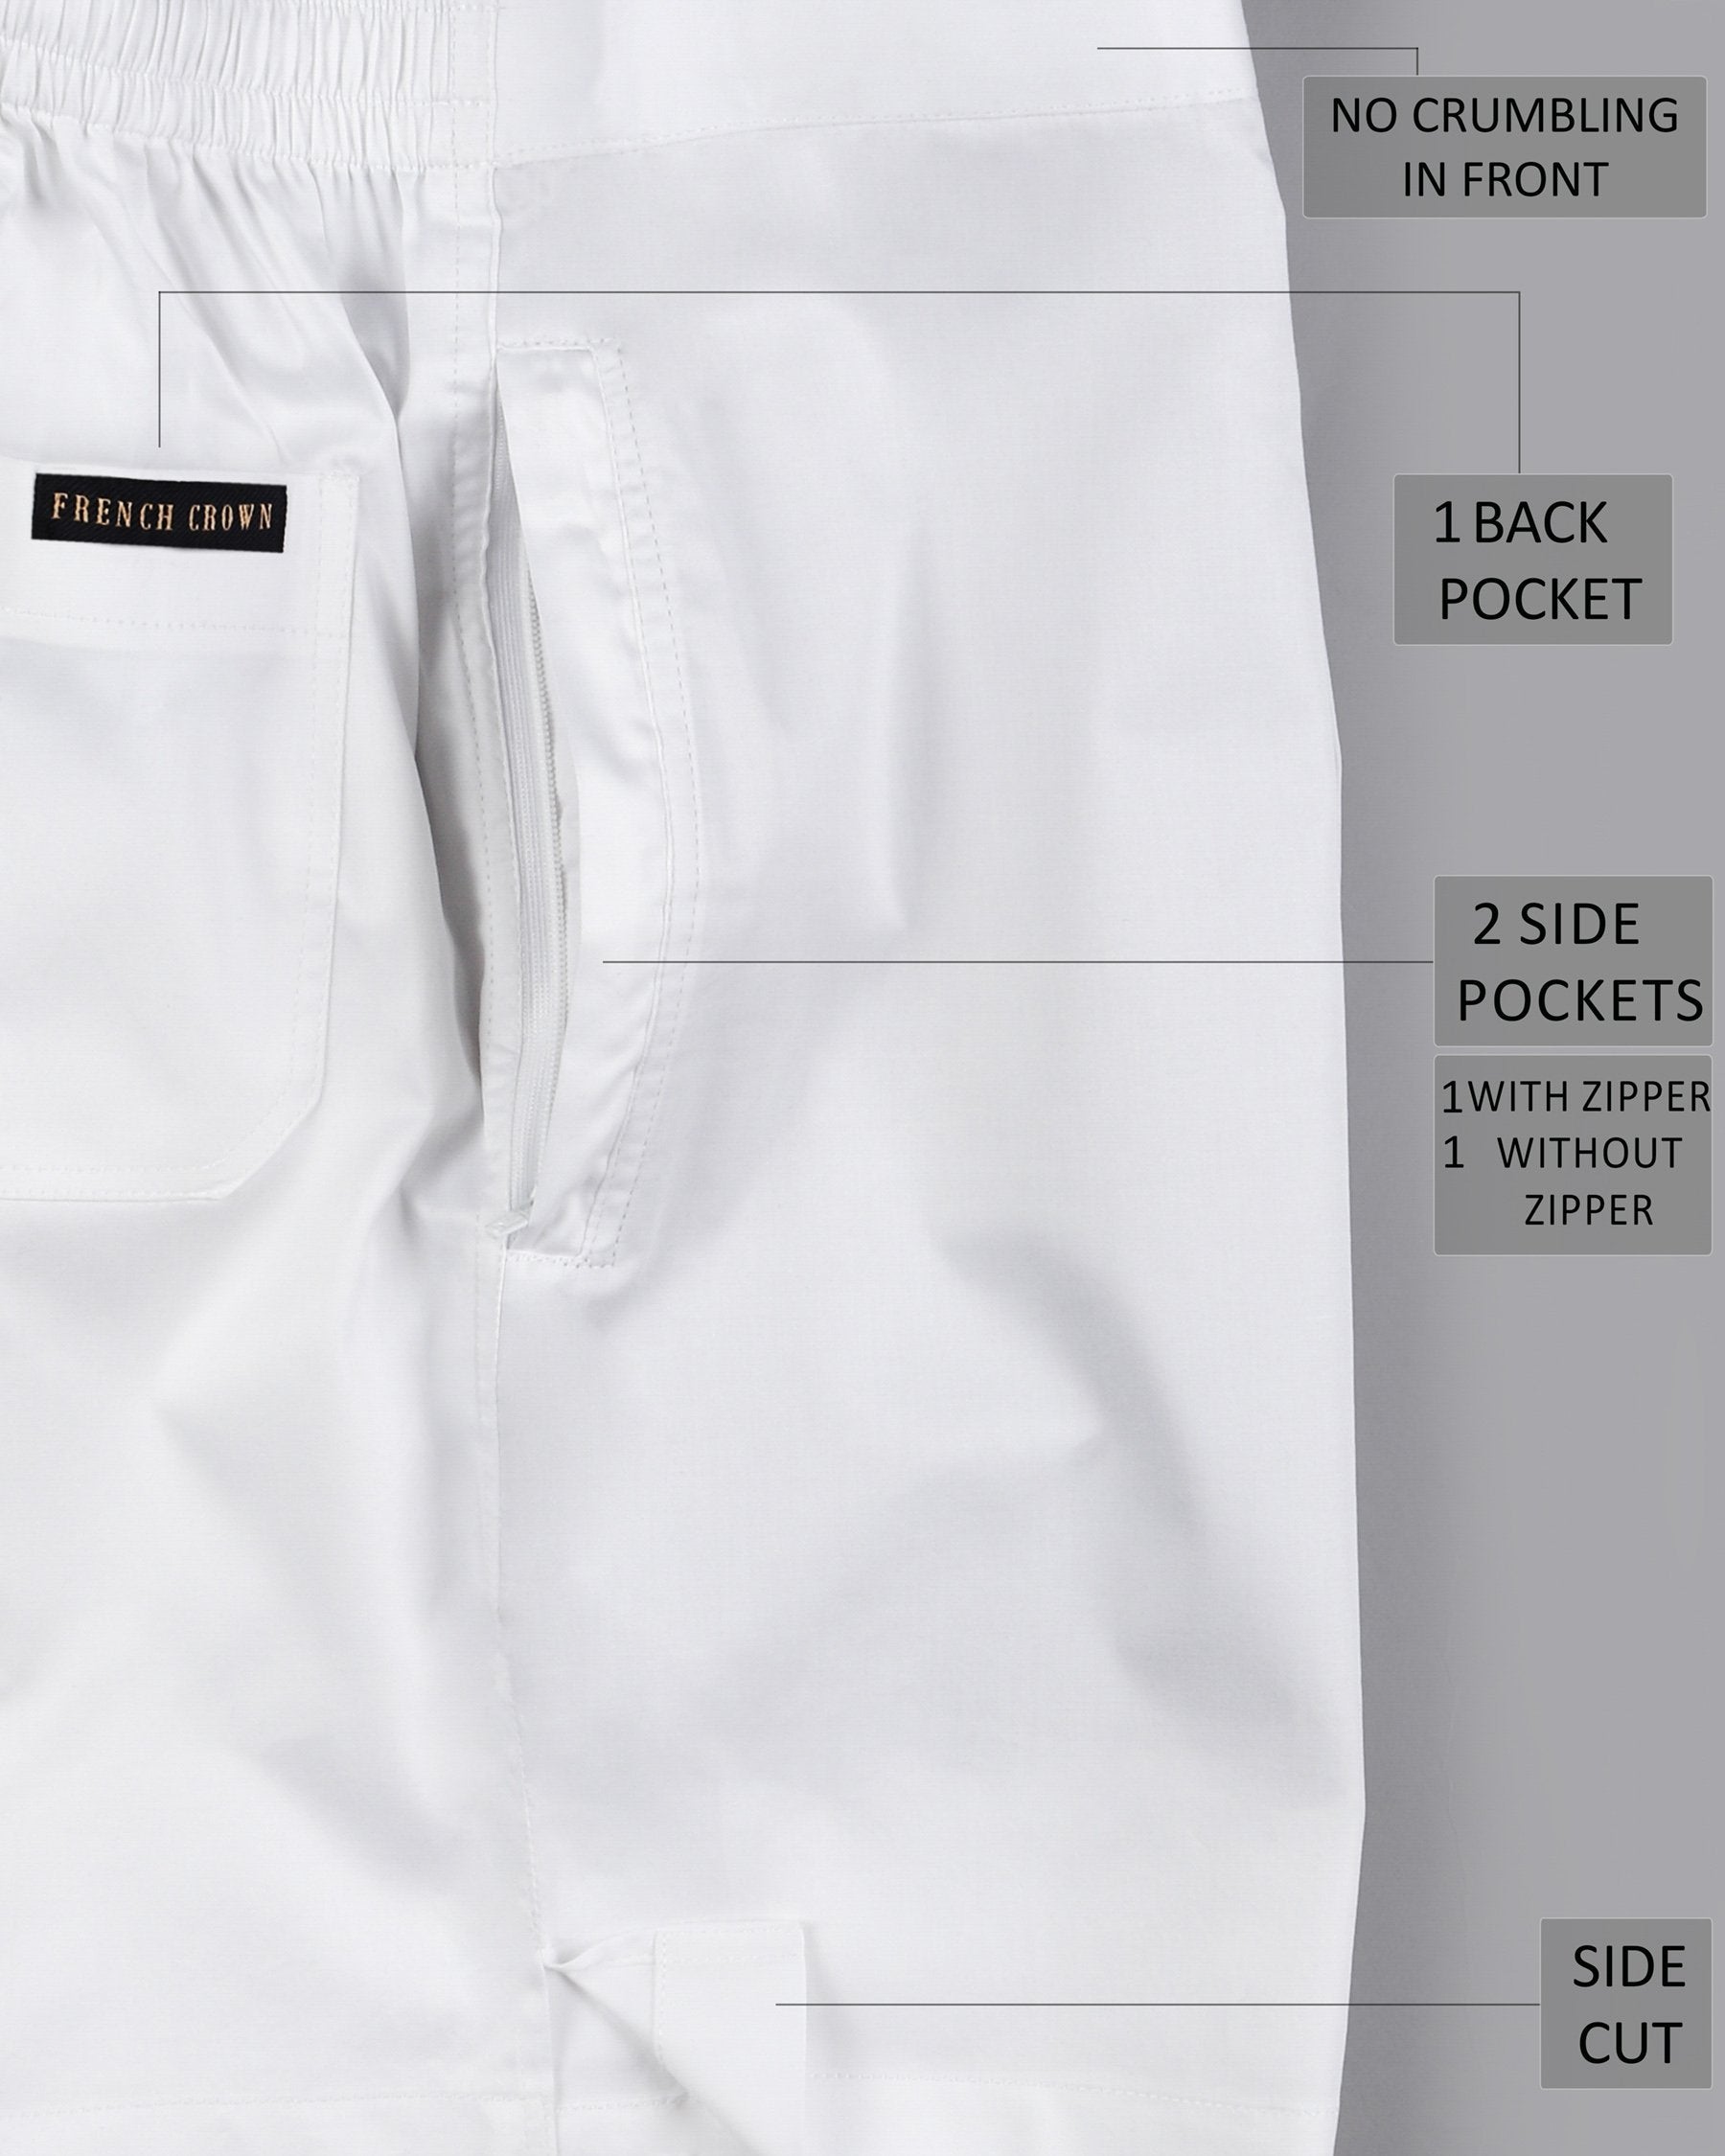 Bright White Premium Cotton and Jade Black Linen Shorts SR01-28, SR01-30, SR01-32, SR01-34, SR01-36, SR01-38, SR01-40, SR01-42, SR01-44